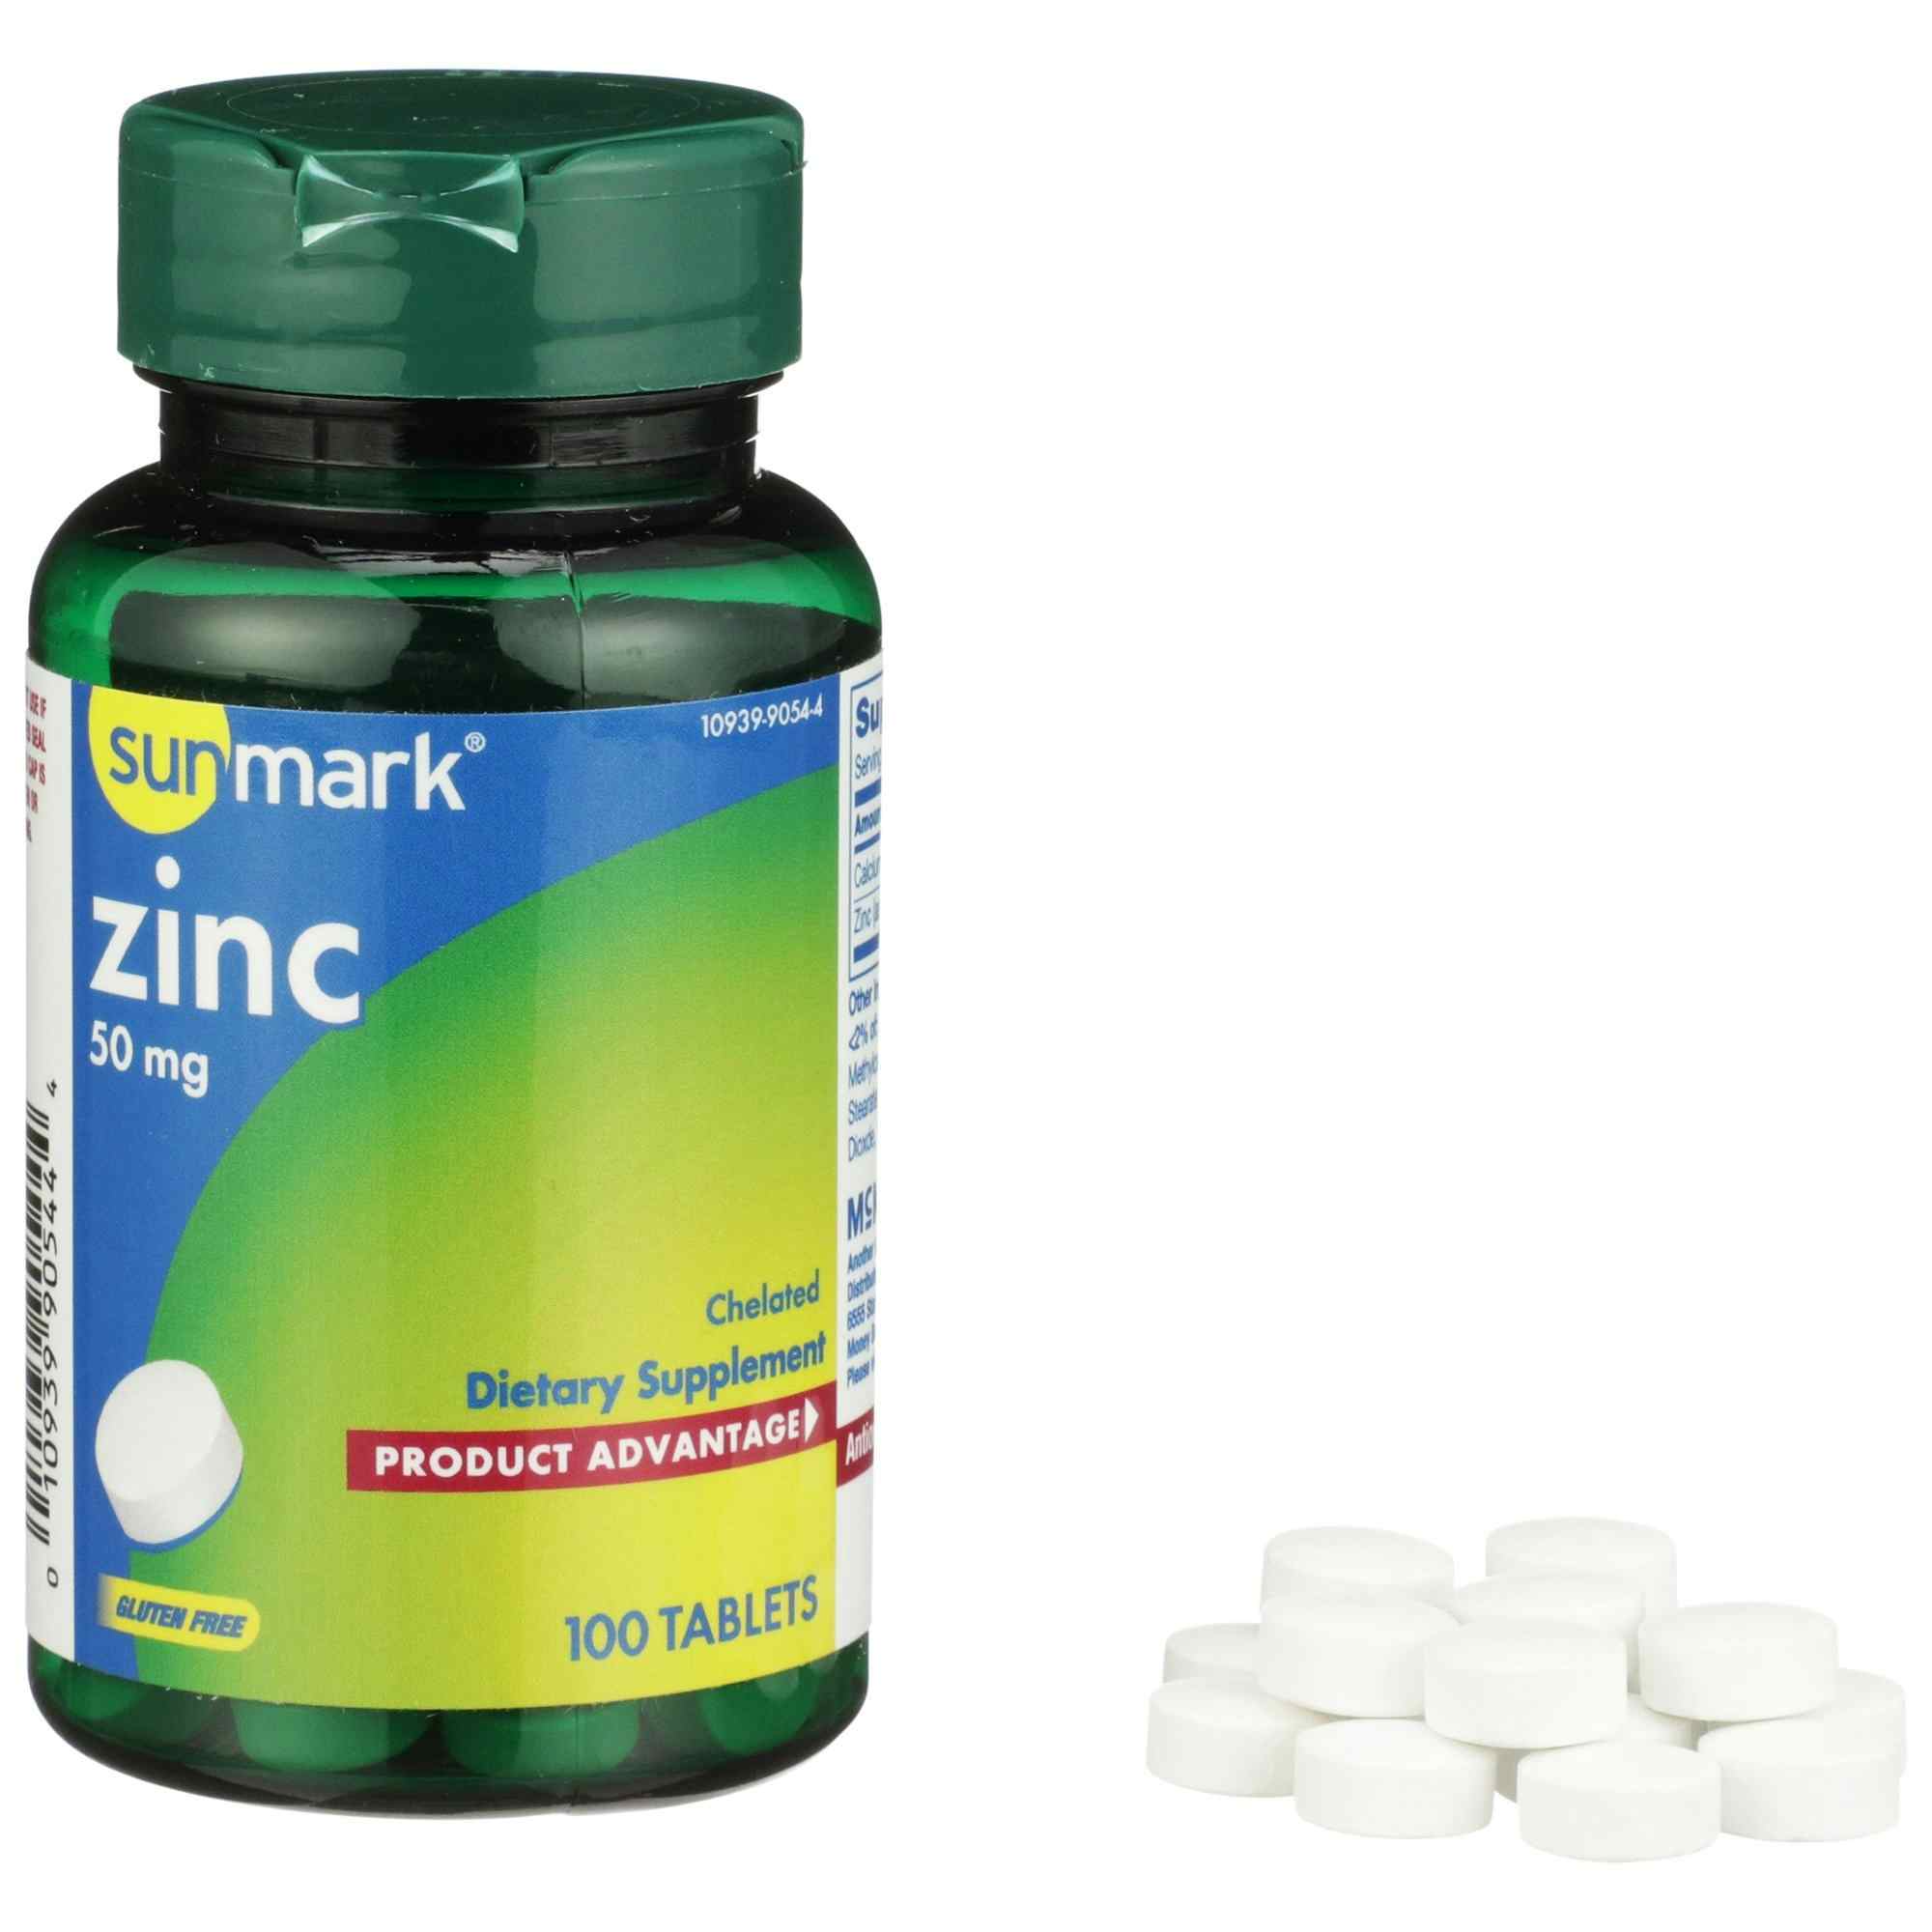 sunmark Zinc Dietary Supplement, 50 mg, 100 Tablets, 01093990544, 1 Bottle